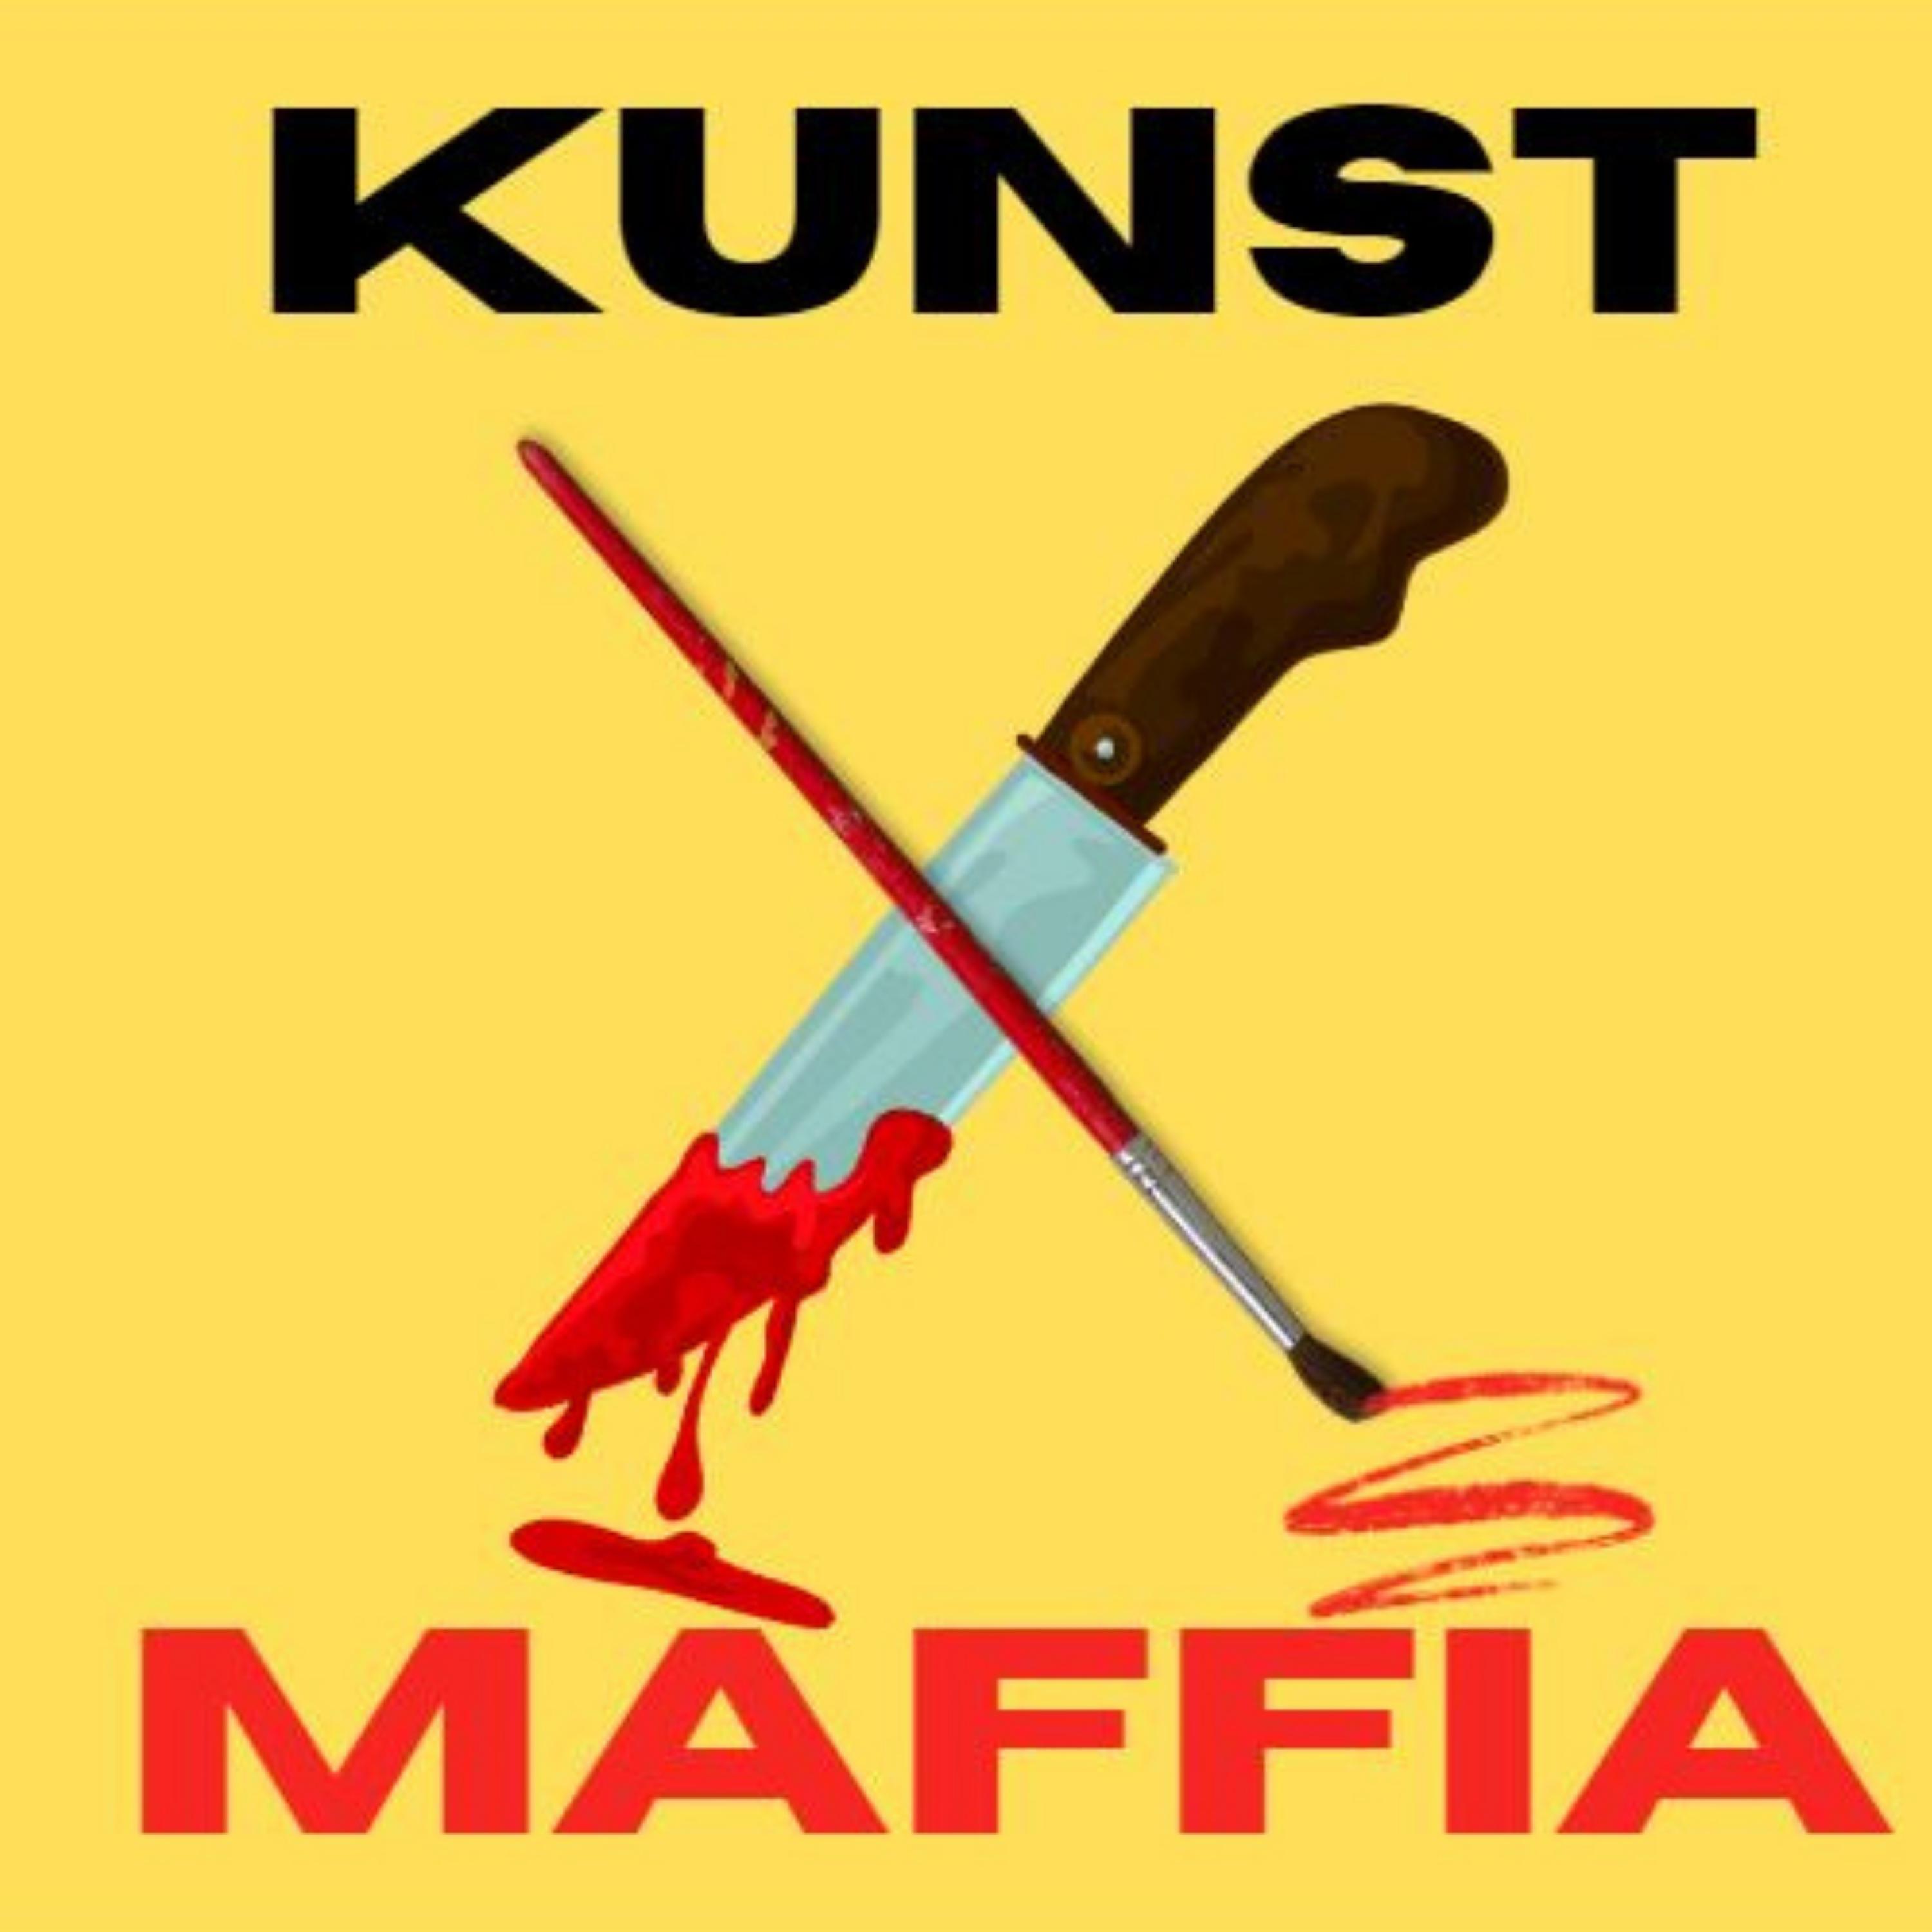 Kunstmaffia logo